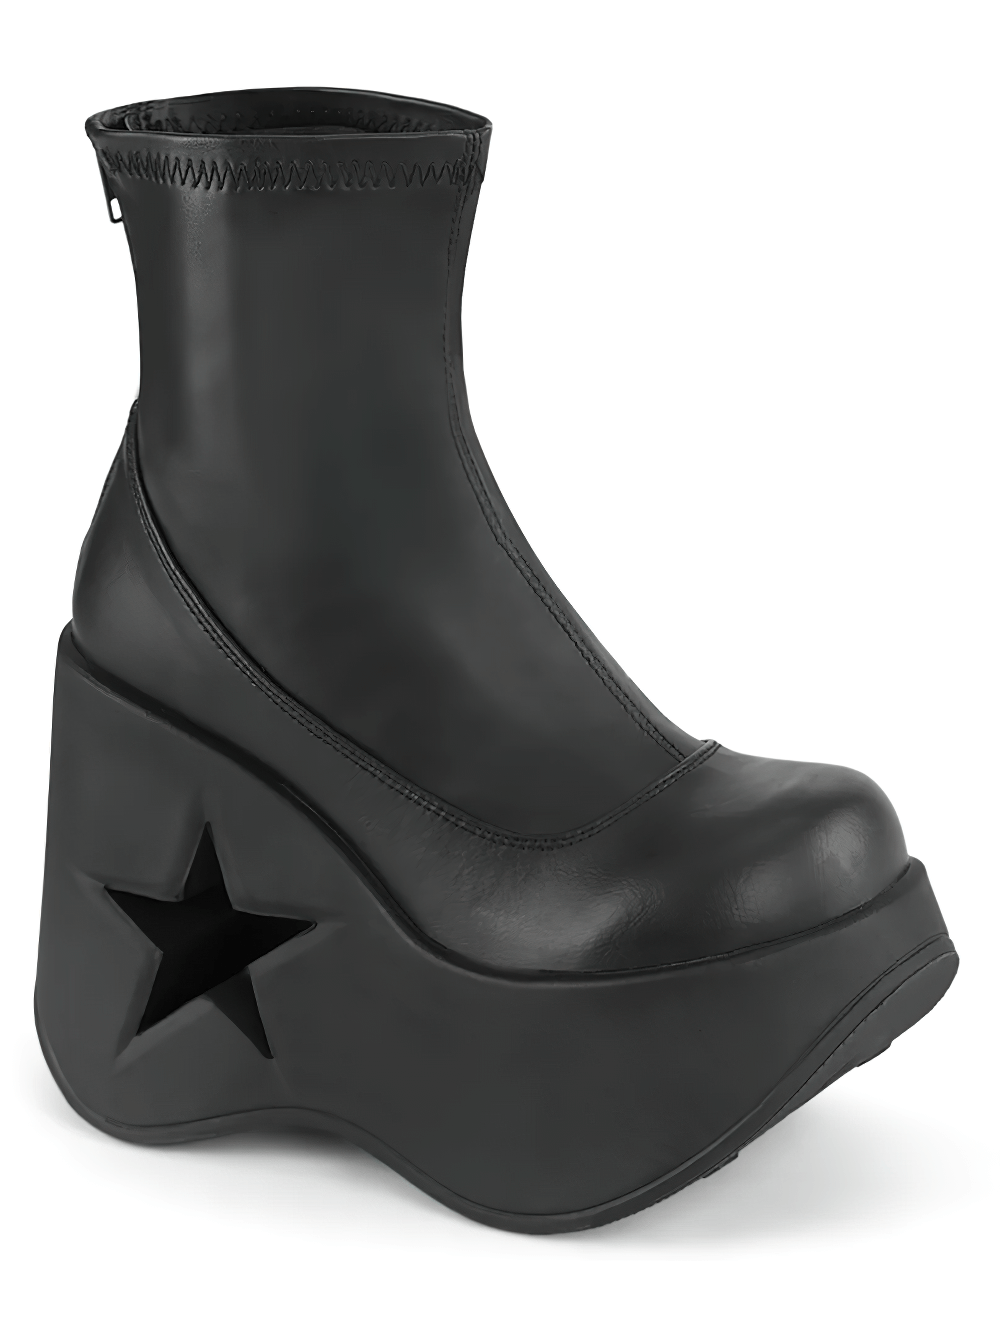 DEMONIA Black Star Platform Stretch Ankle Boots with Zip